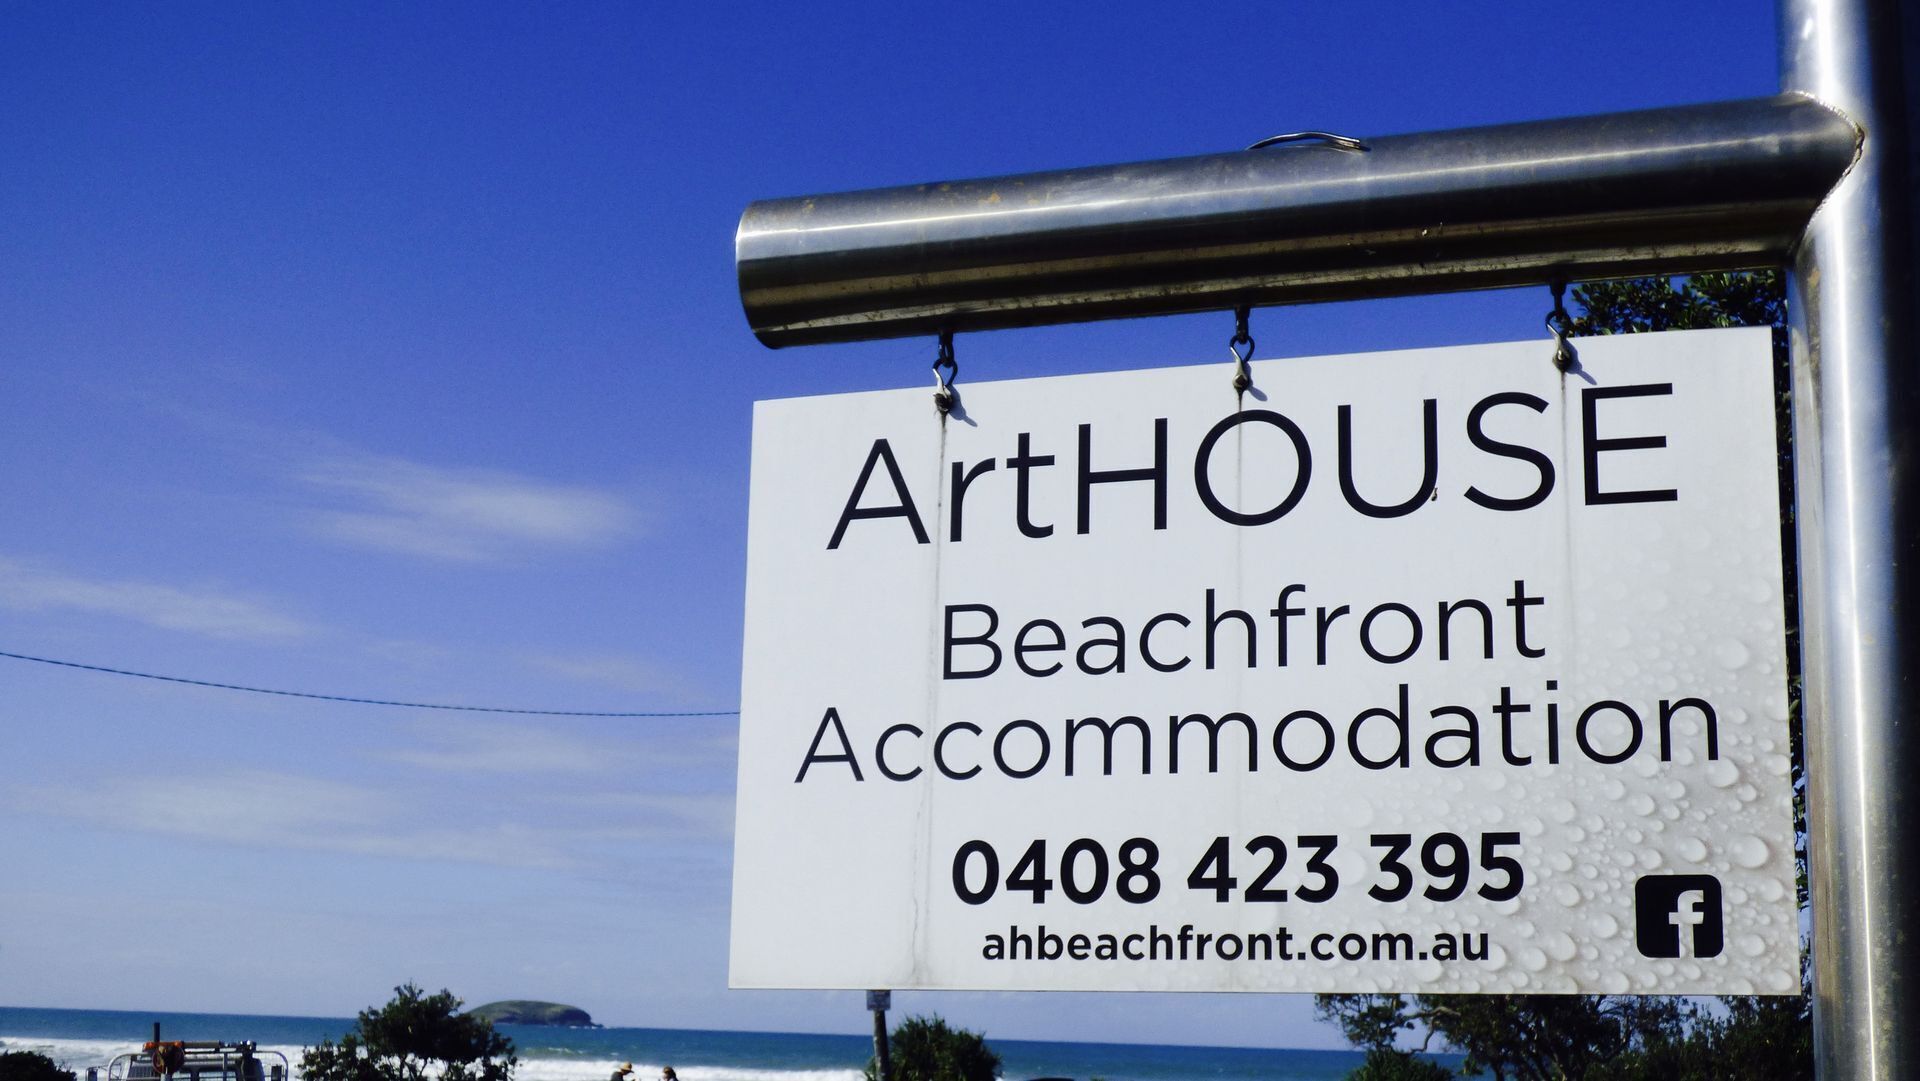 ArtHOUSE Beachfront Accommodation